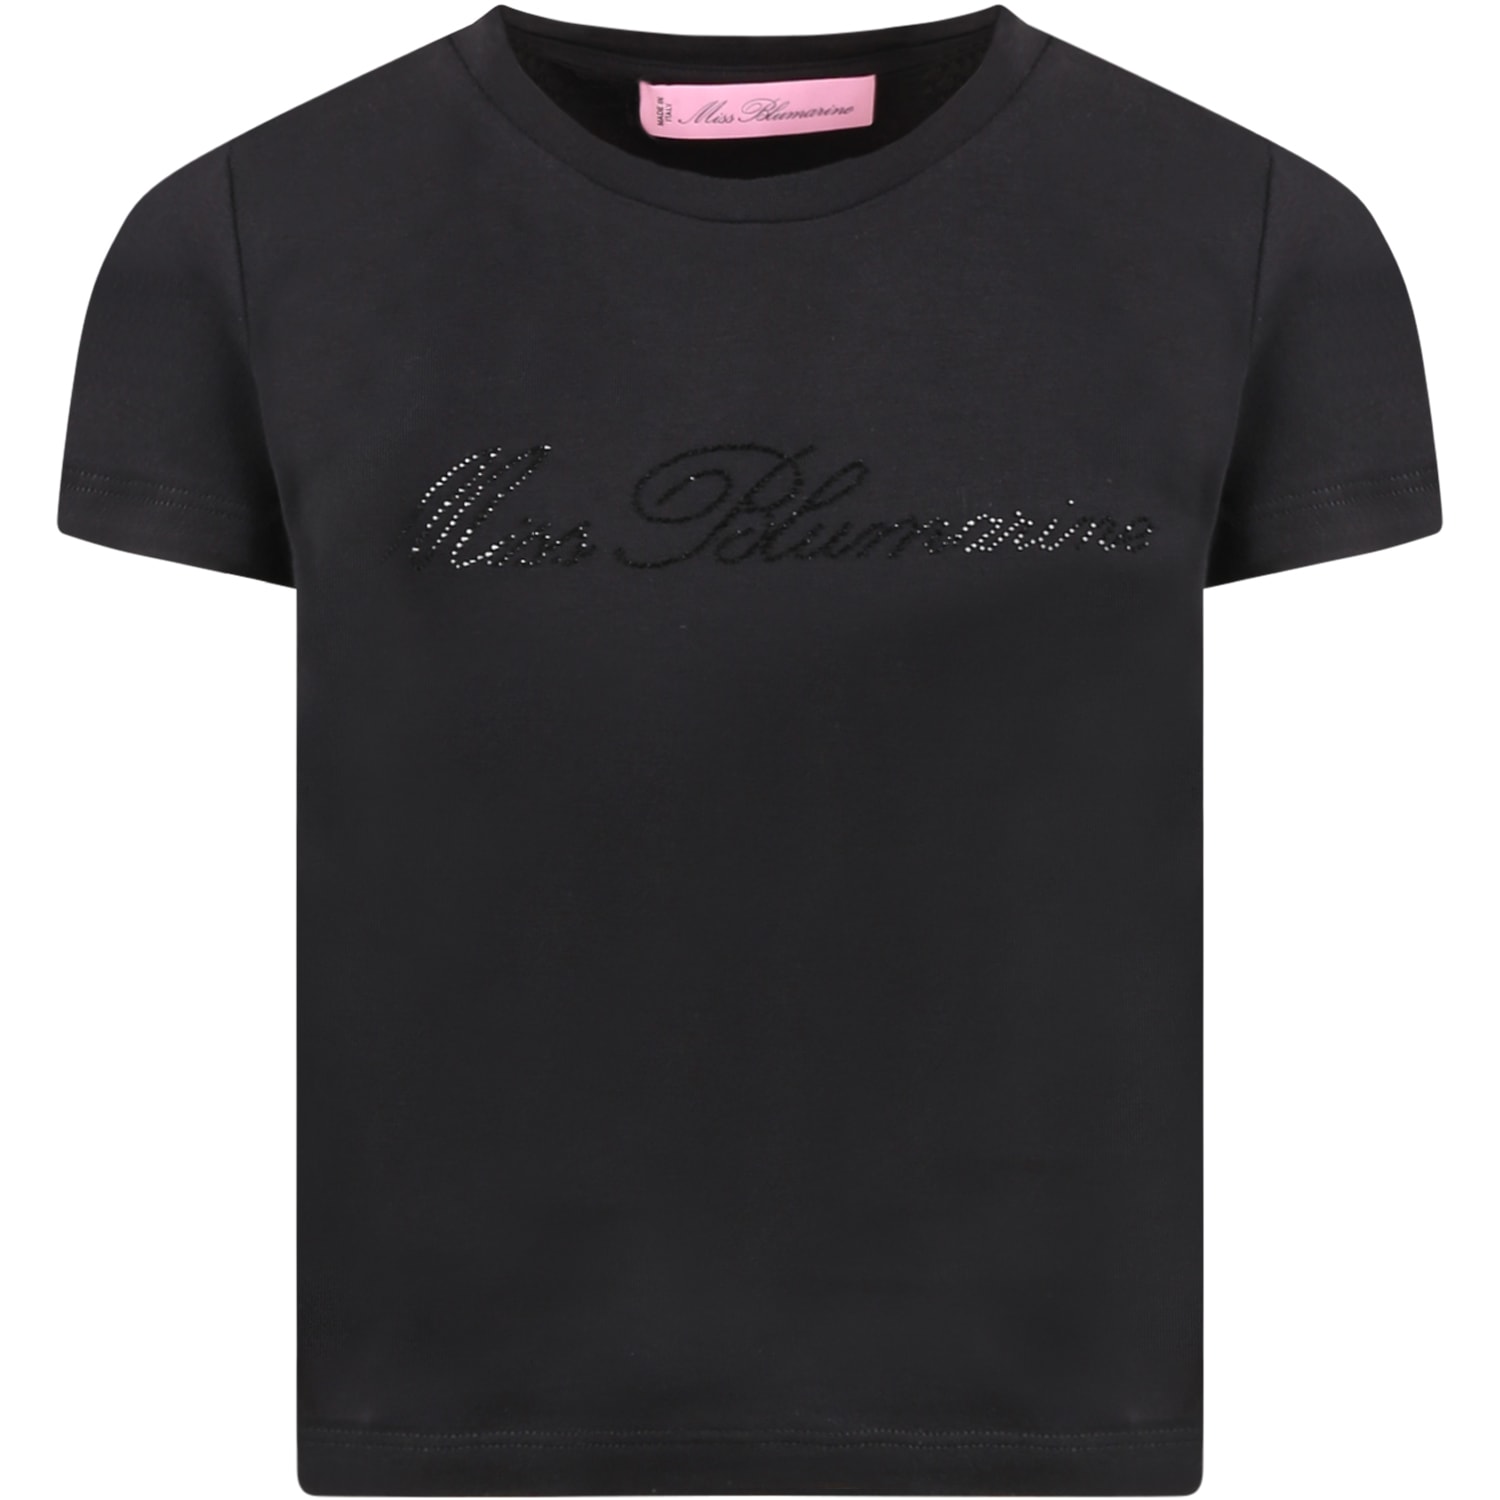 Blumarine Black T-shirt For Girl With Logo